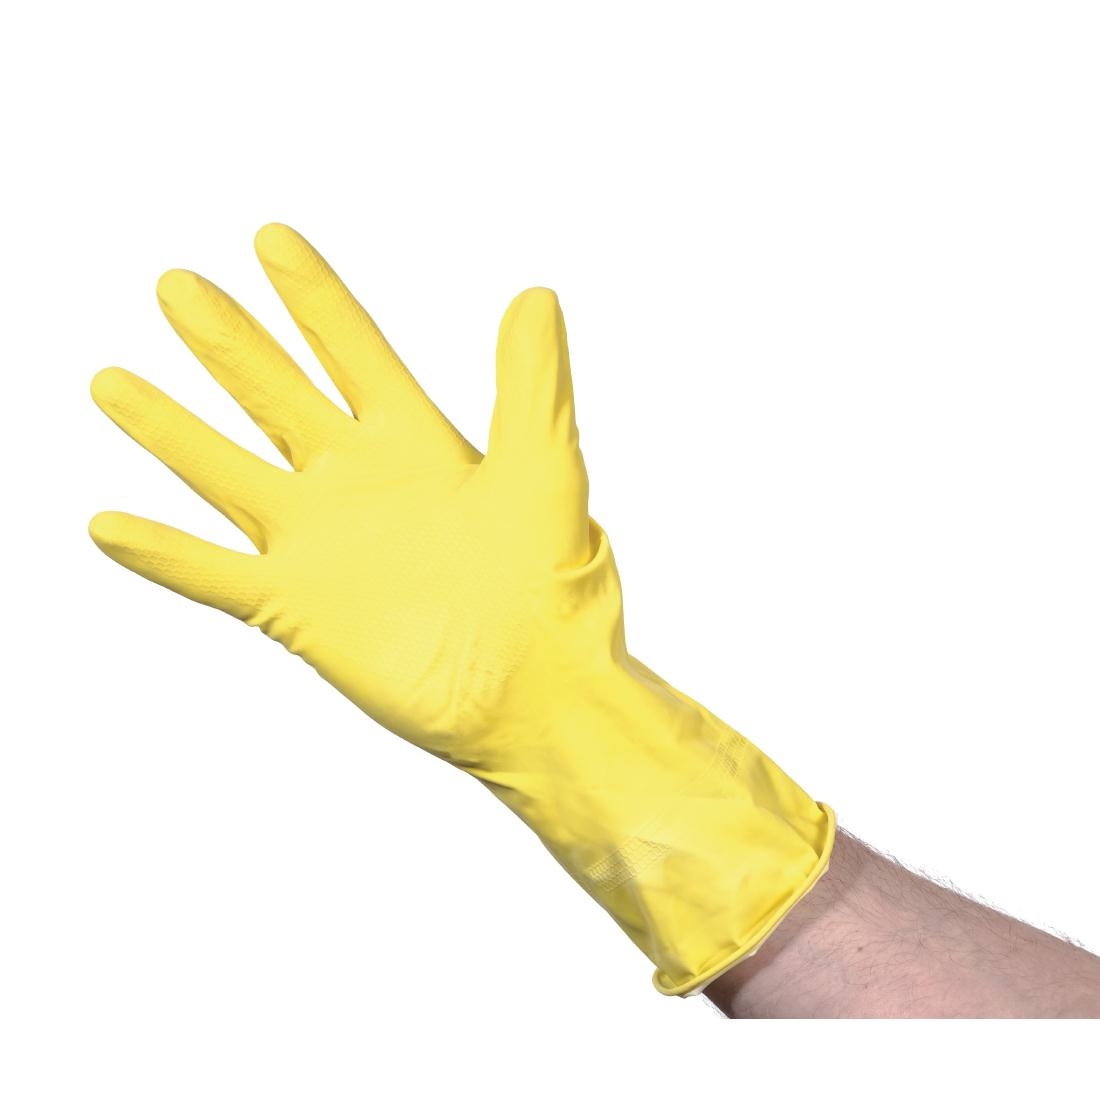 Household rubber gloves Yellow - CL-GLOVES-PK